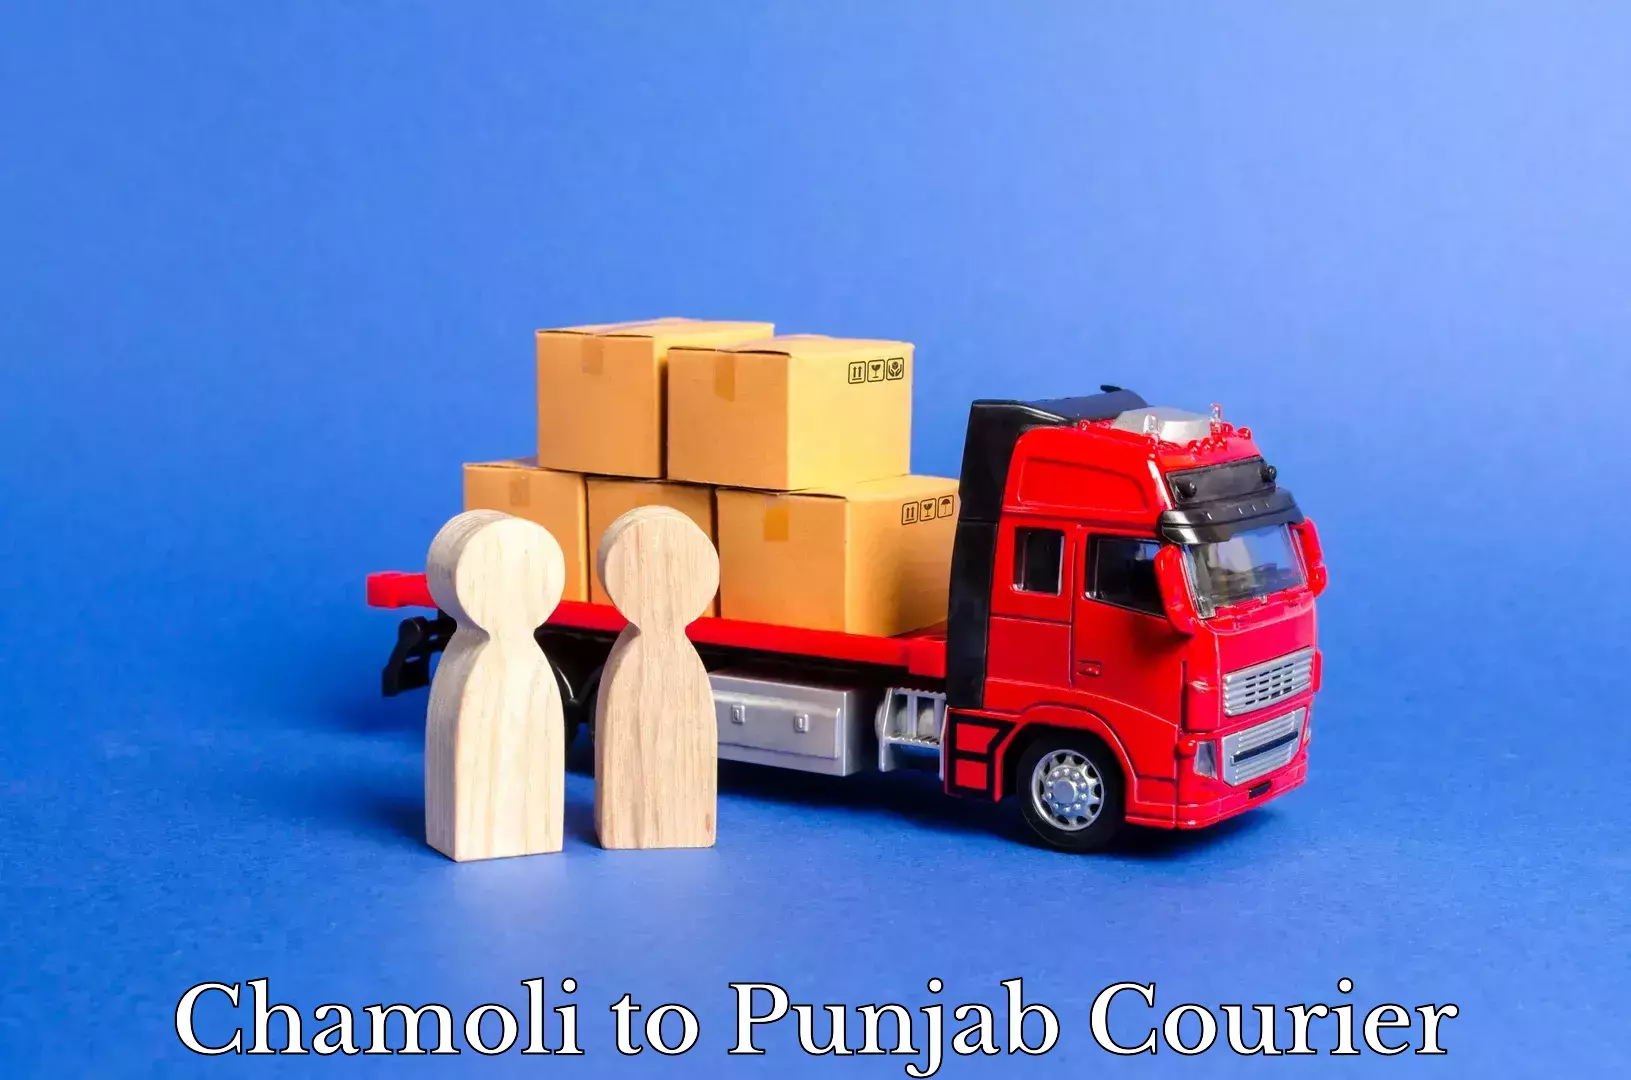 Bulk courier orders Chamoli to Punjab